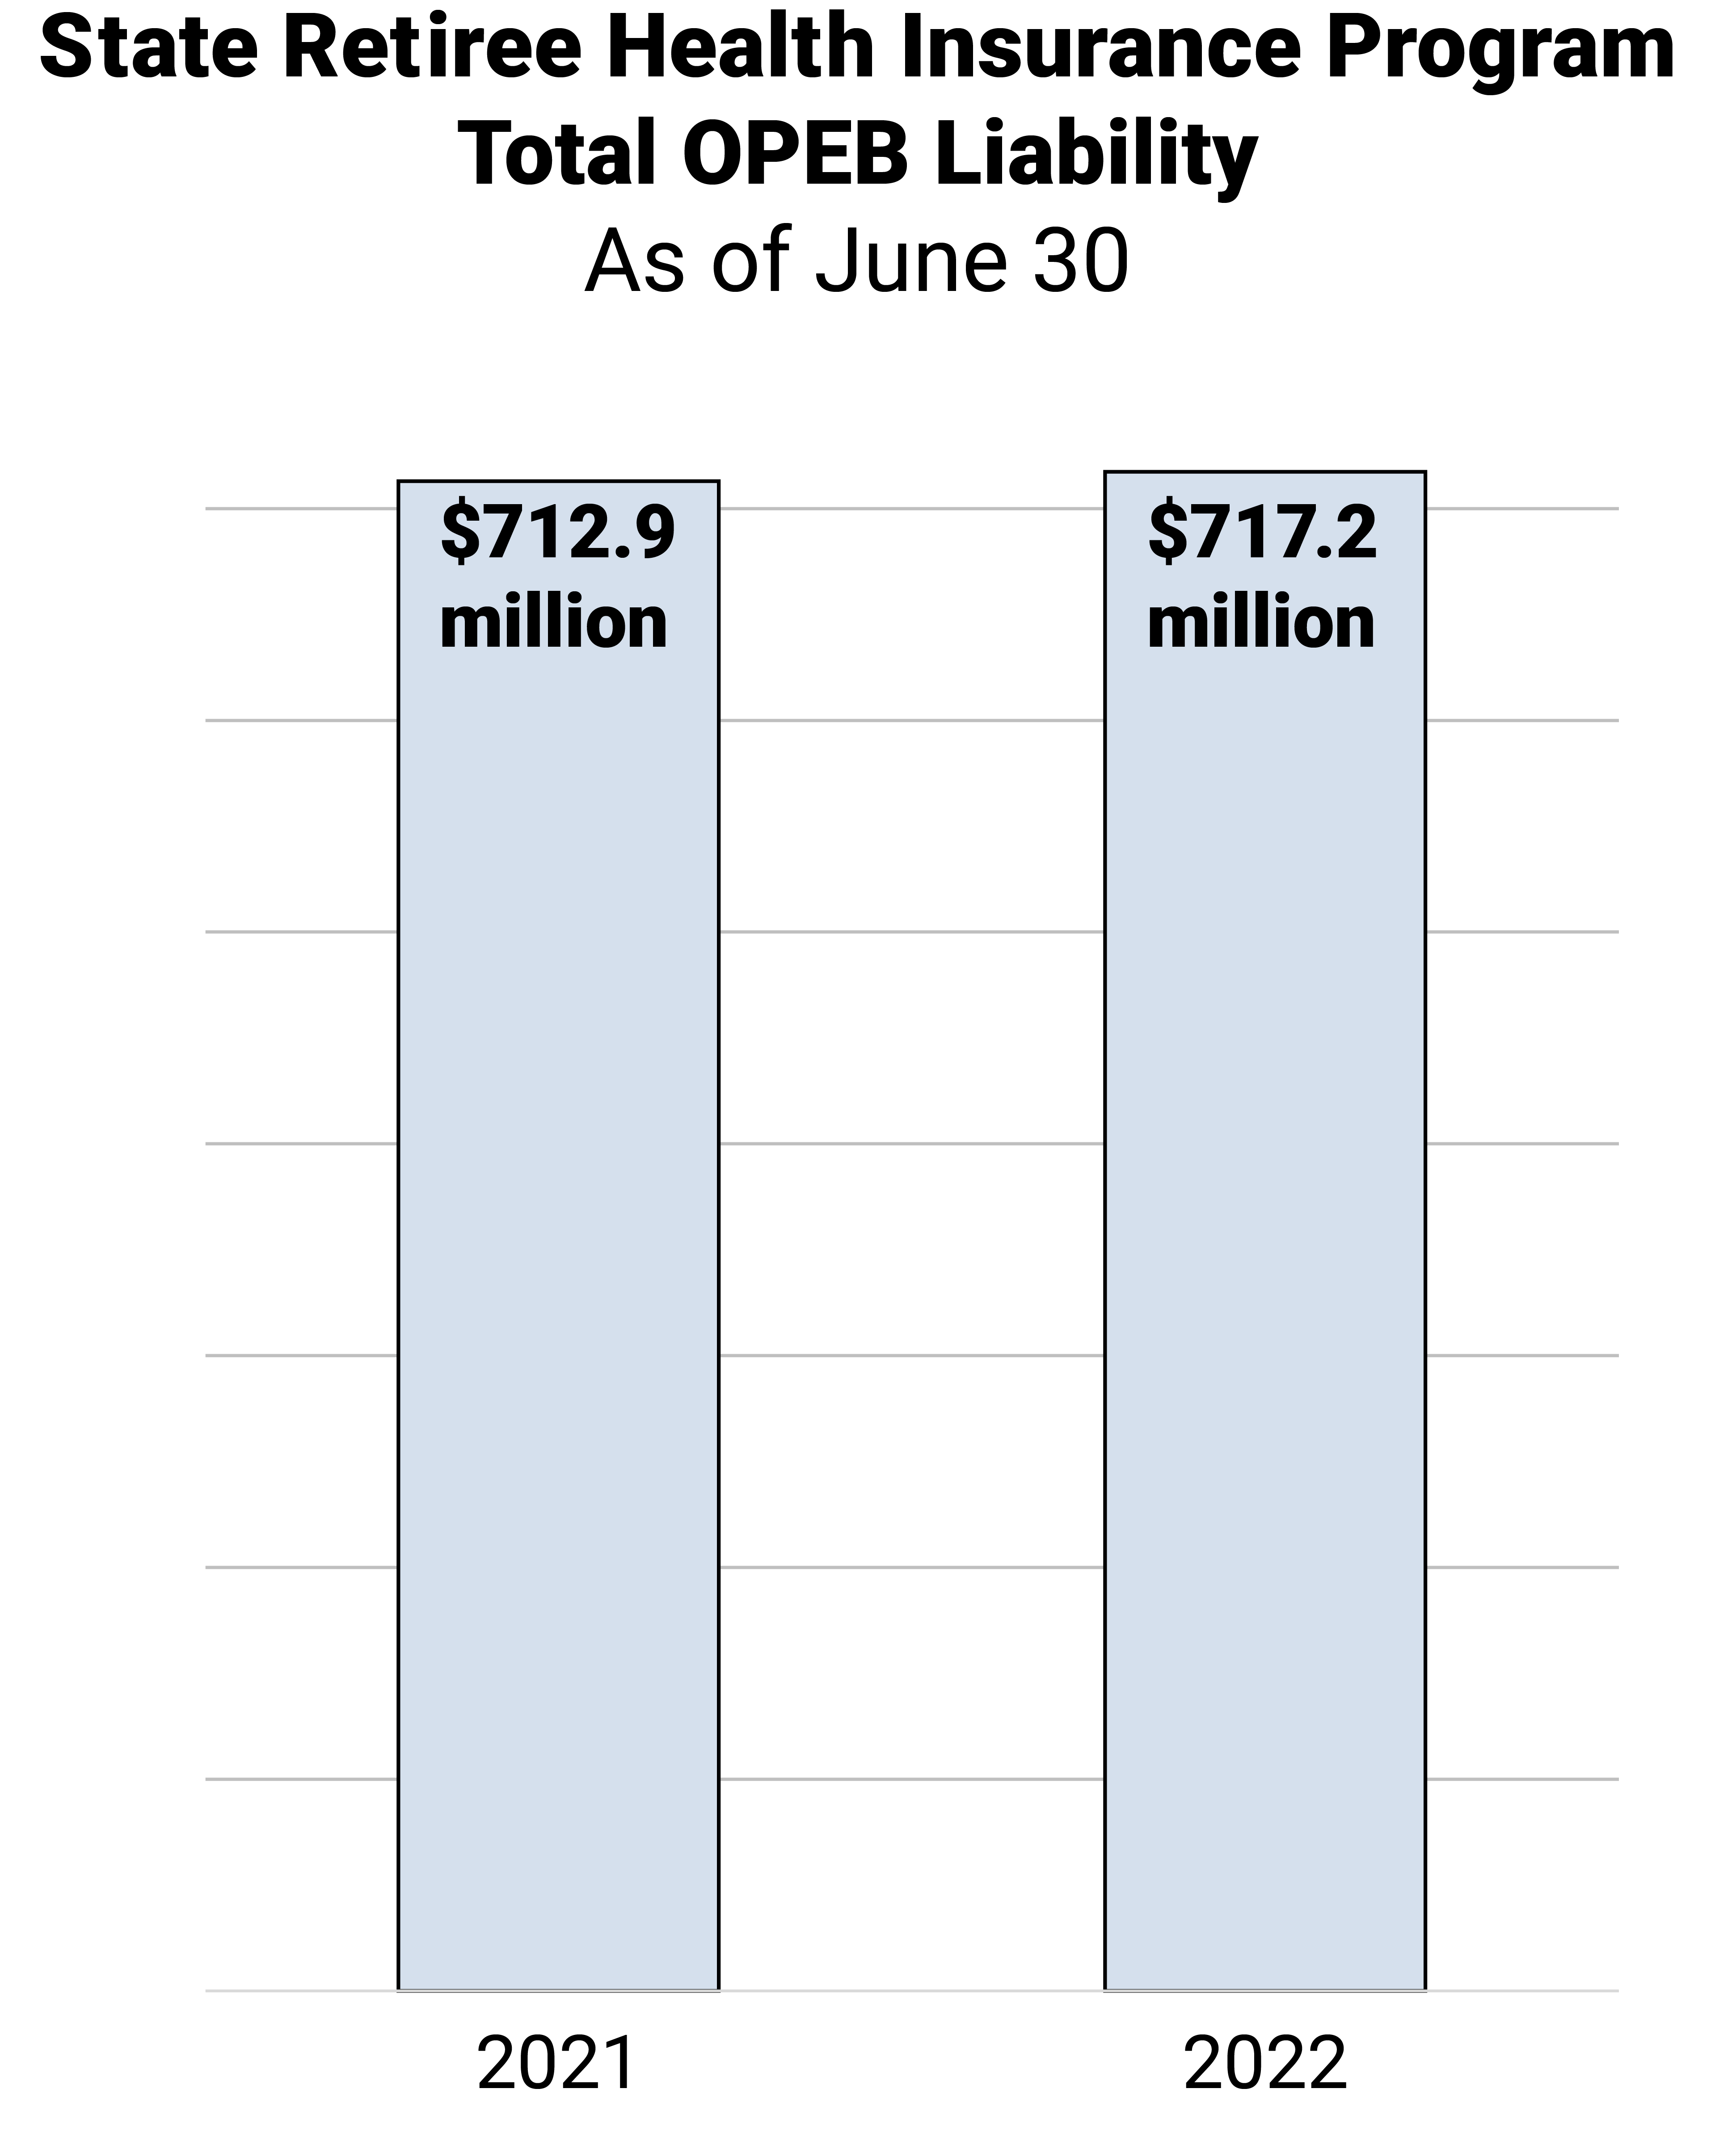 bar chart showing Health Insurance Program Total Liability